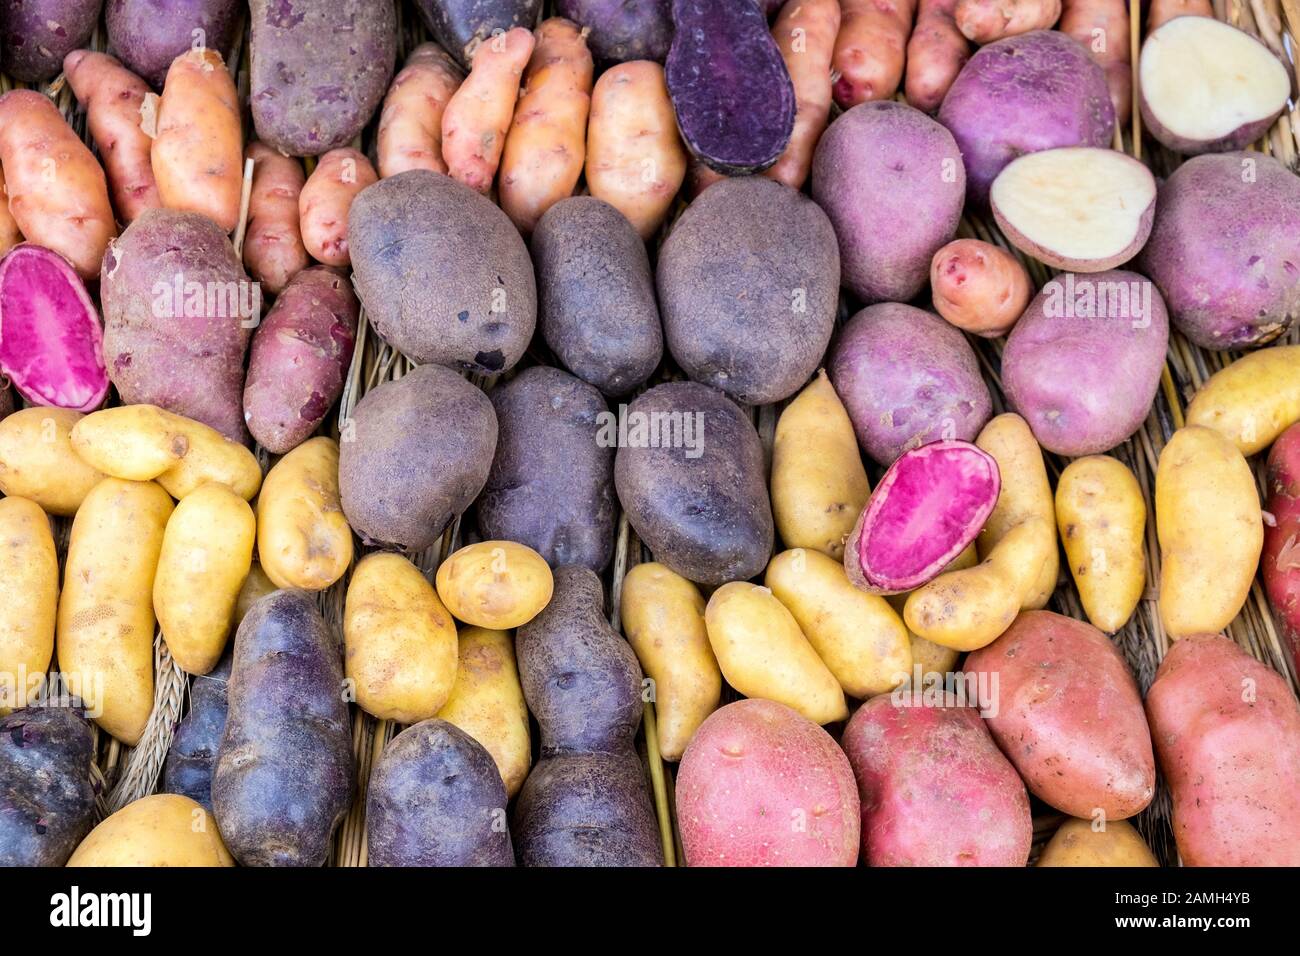 Multi coloured potato varieties display Stock Photo